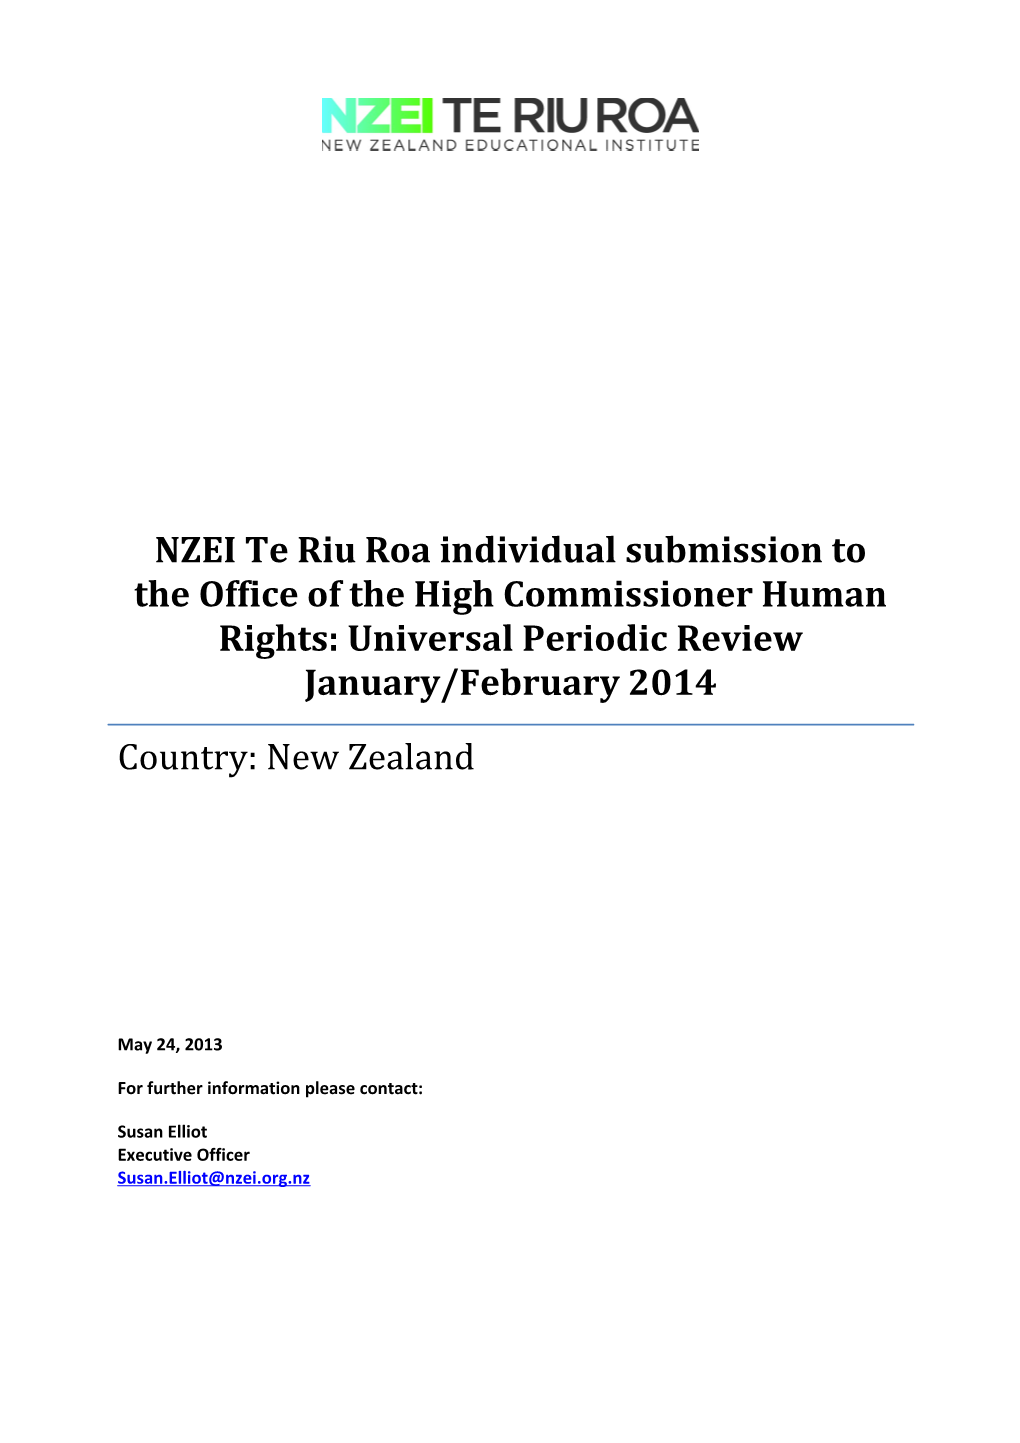 NZEI Te Riu Roa Submission to the Universal Periodic Review 2013